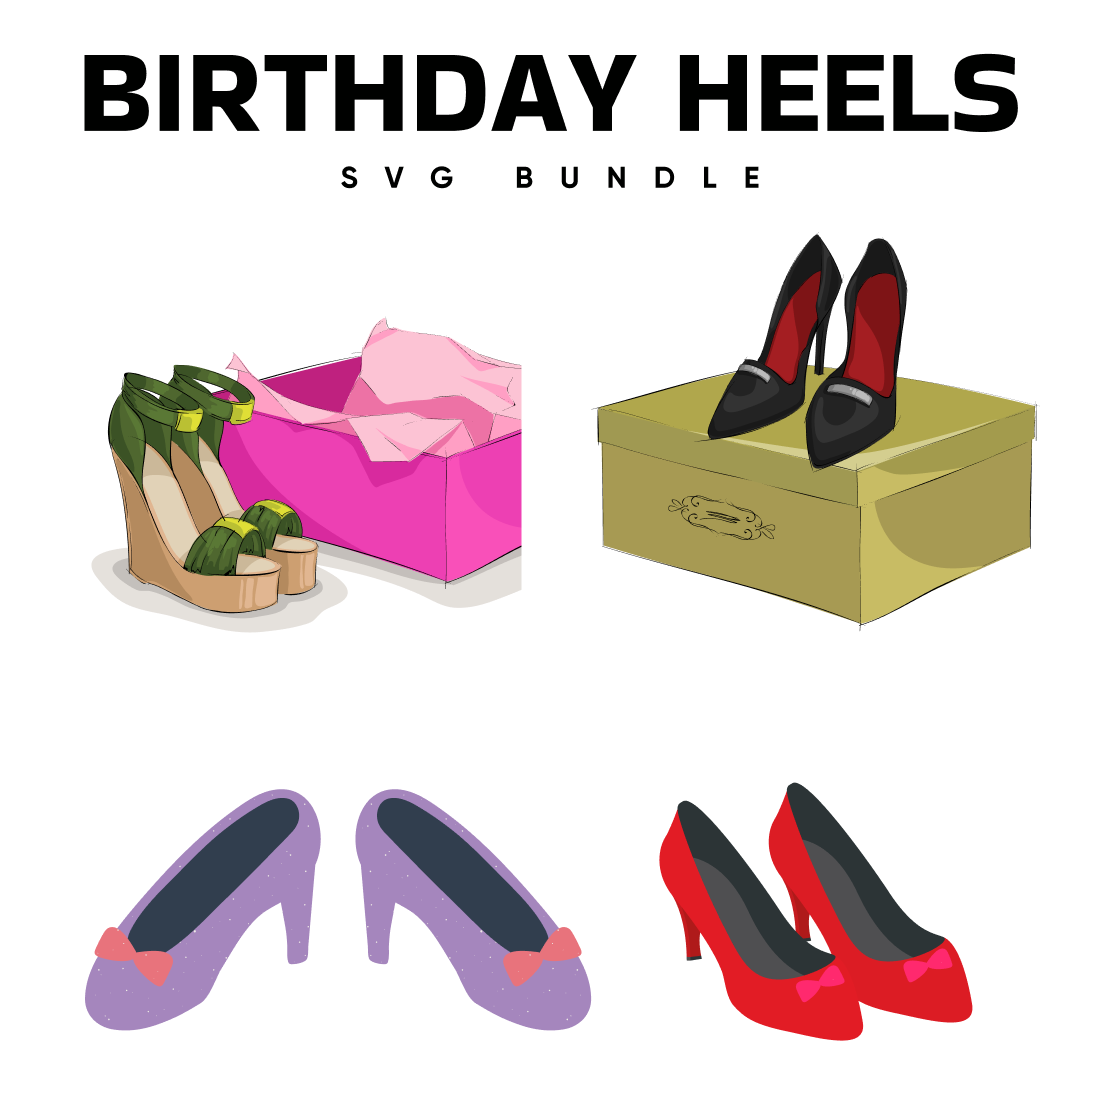 Preview birthday heels svg bundle.